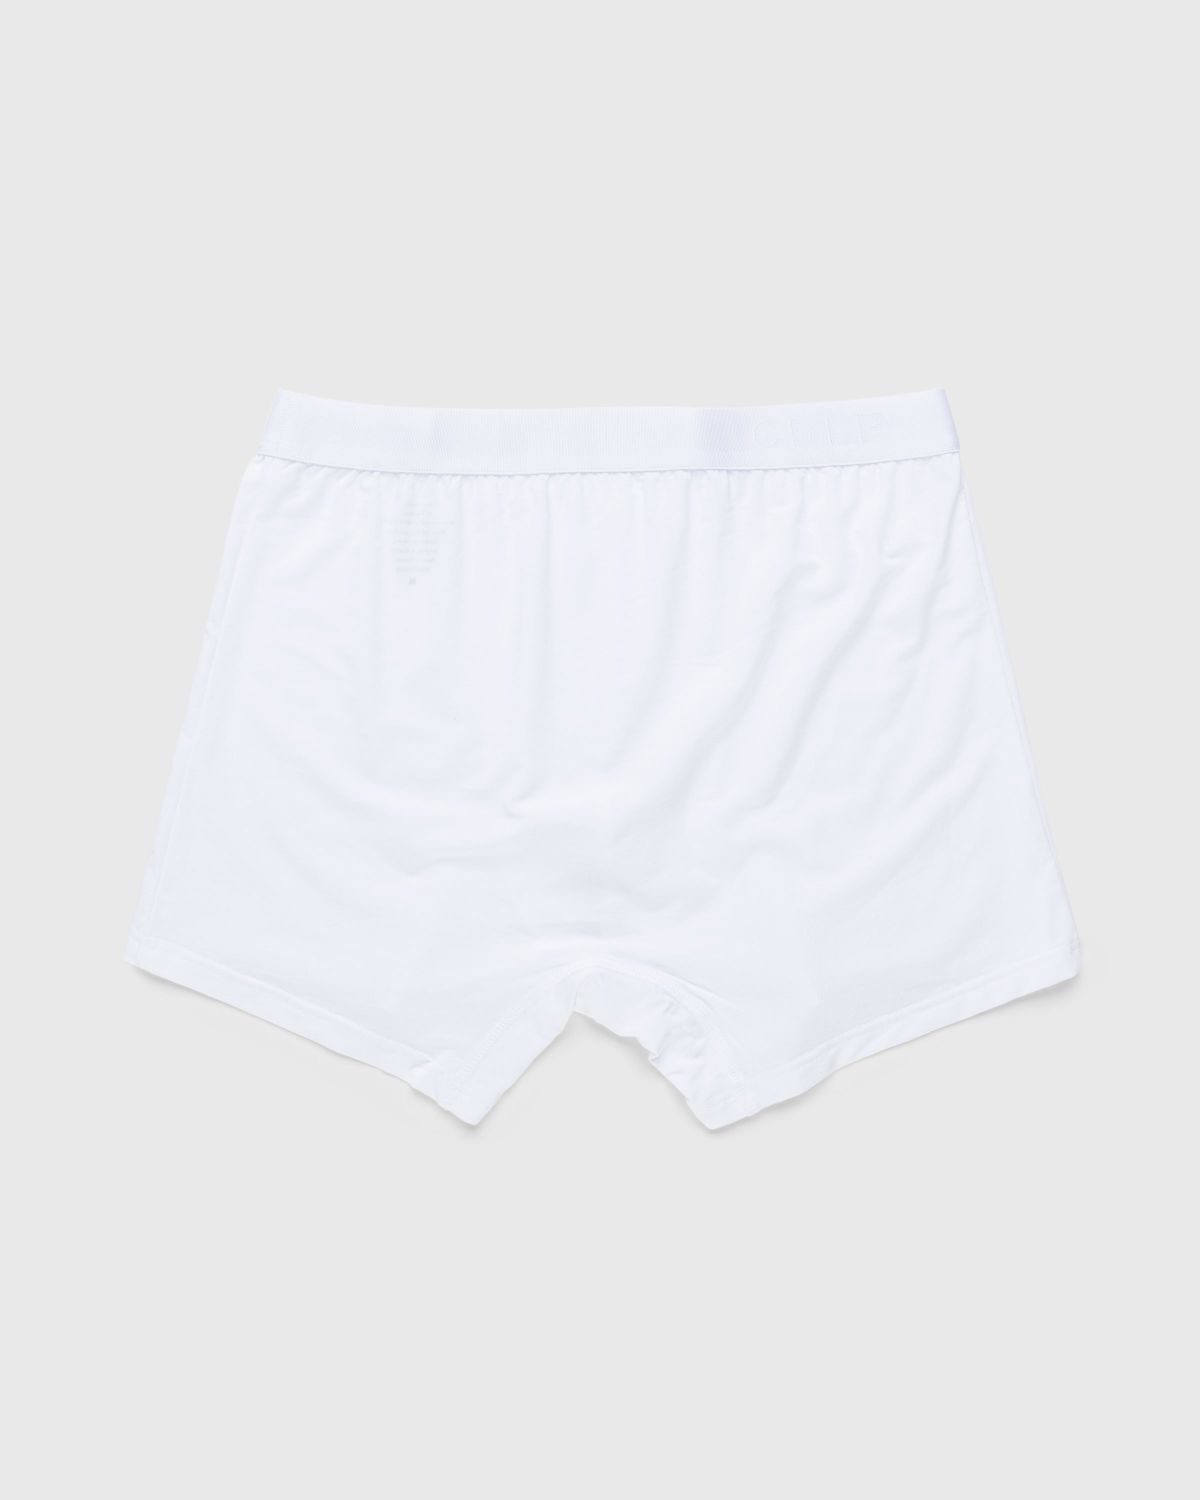 CDLP – Boxer Briefs White - Underwear - White - Image 2